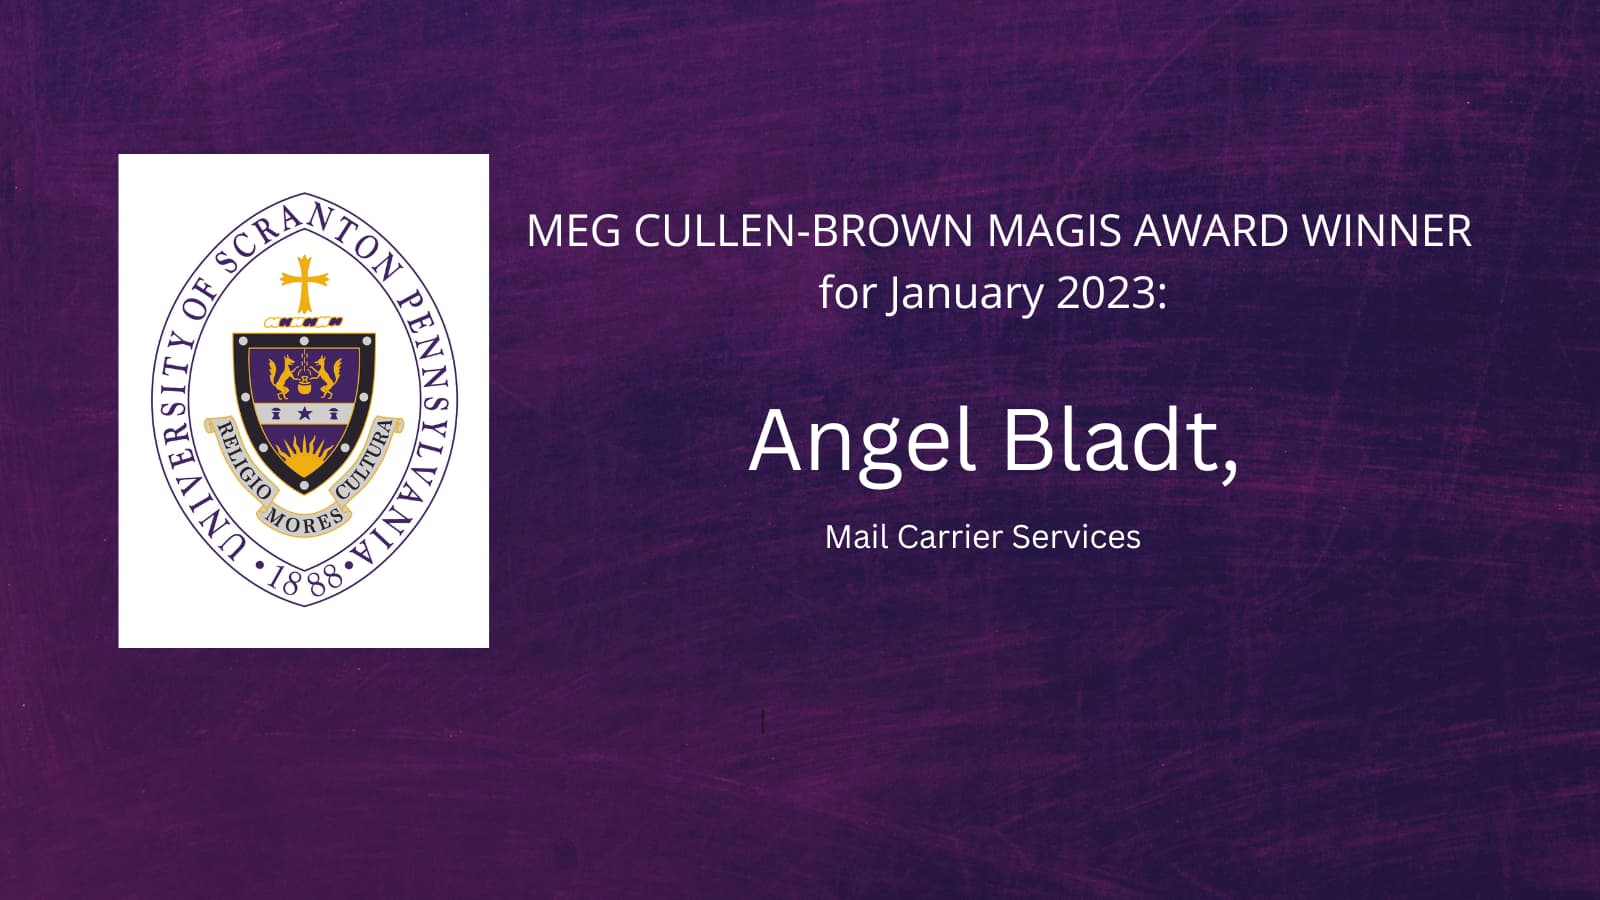 Angel Bladt is Meg Cullen-Brown Magis Award Winner